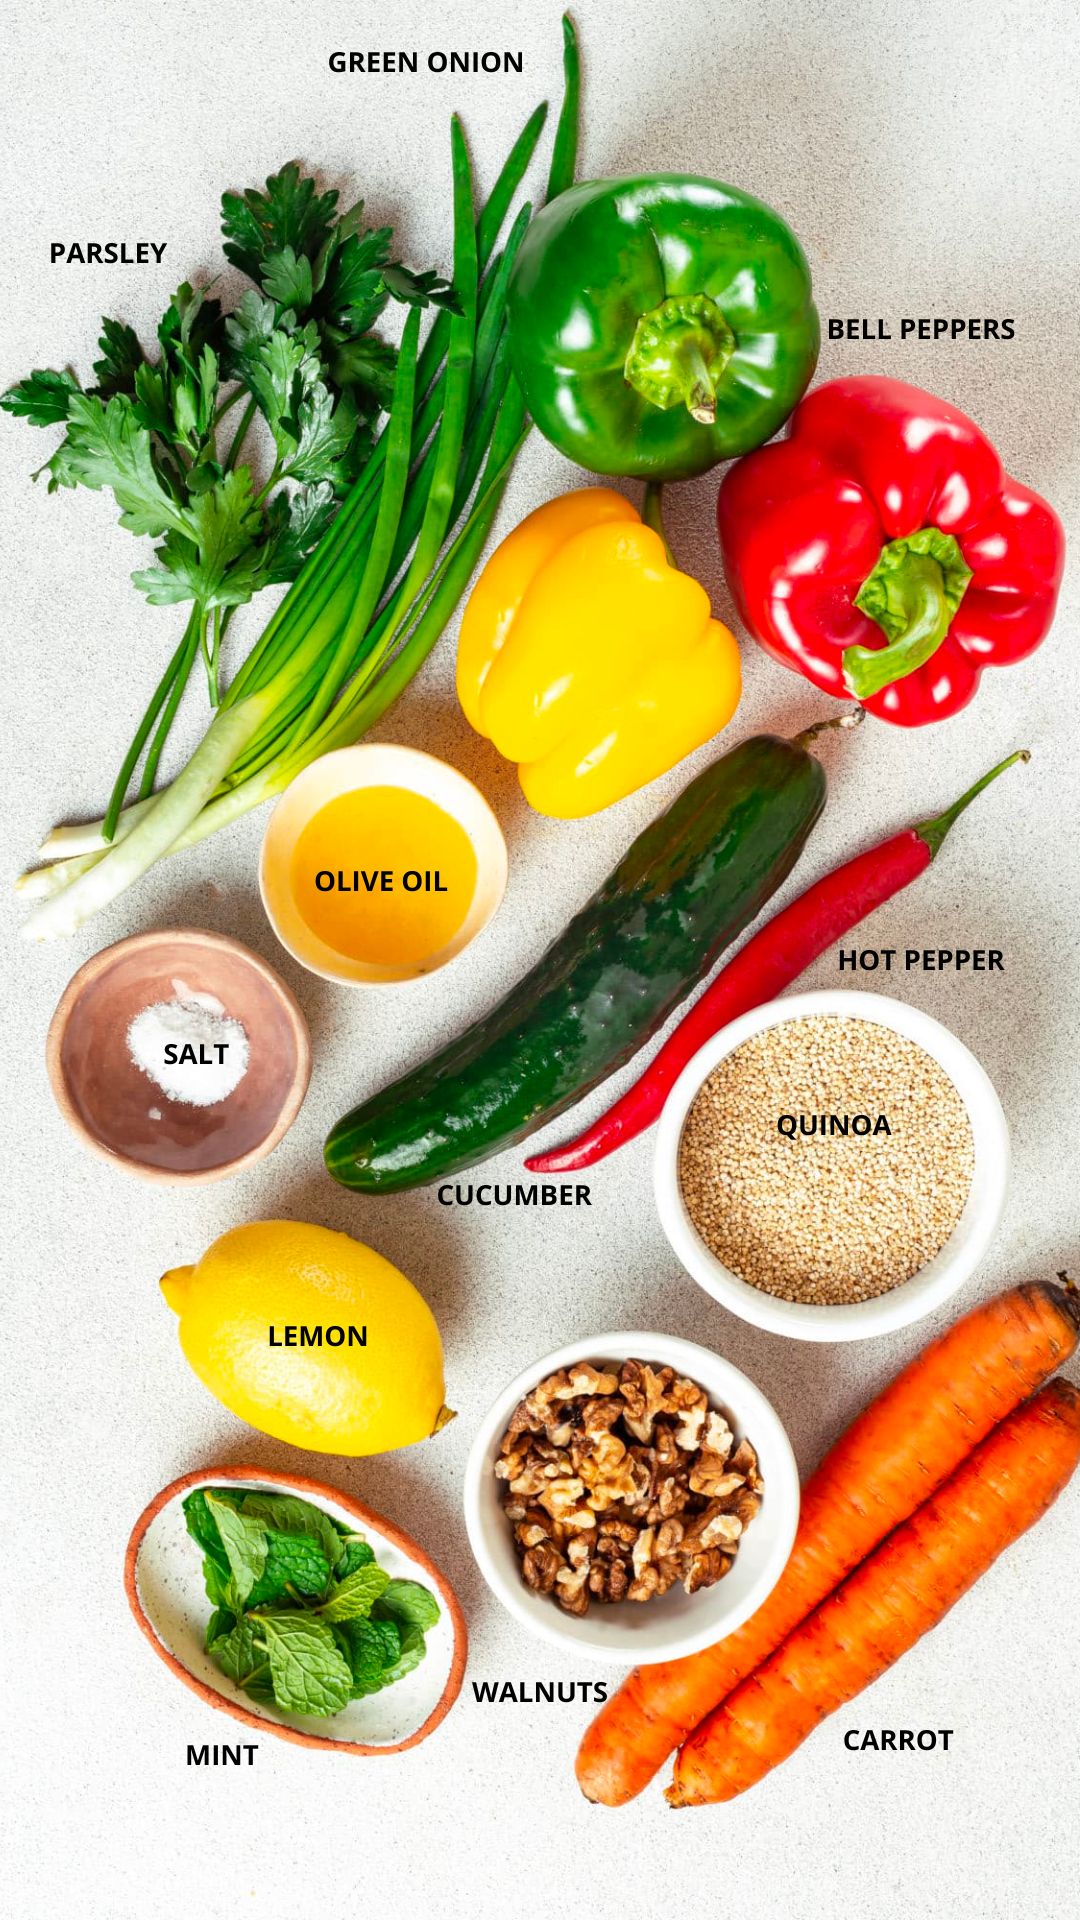 quinoa salad ingredients- green onion, parsley, bell peppers, hot pepper, cucumber, quinoa, salt, olive oil, lemon, mint, walnuts, and carrot.